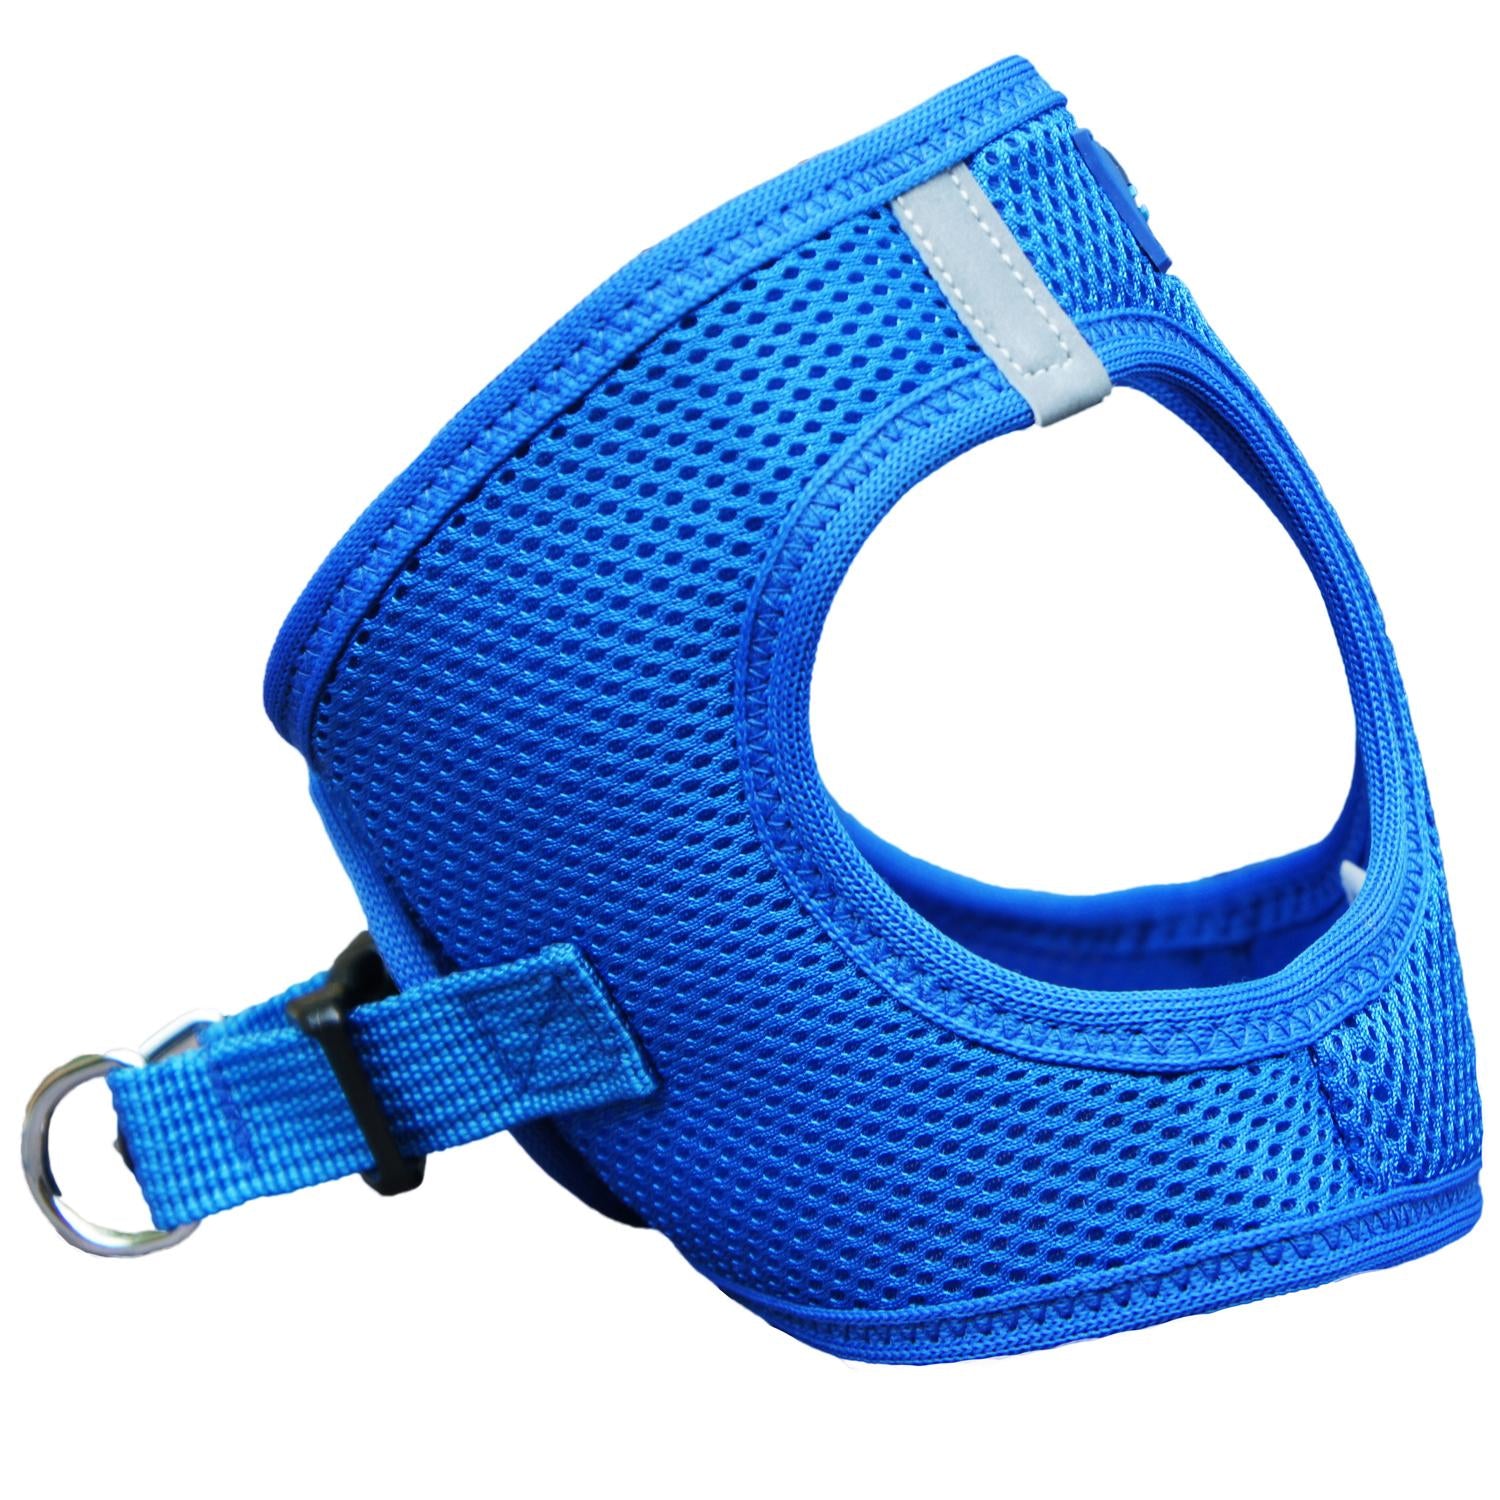 american-river-ultra-choke-free-dog-harness-cobalt-blue-5296.jpg